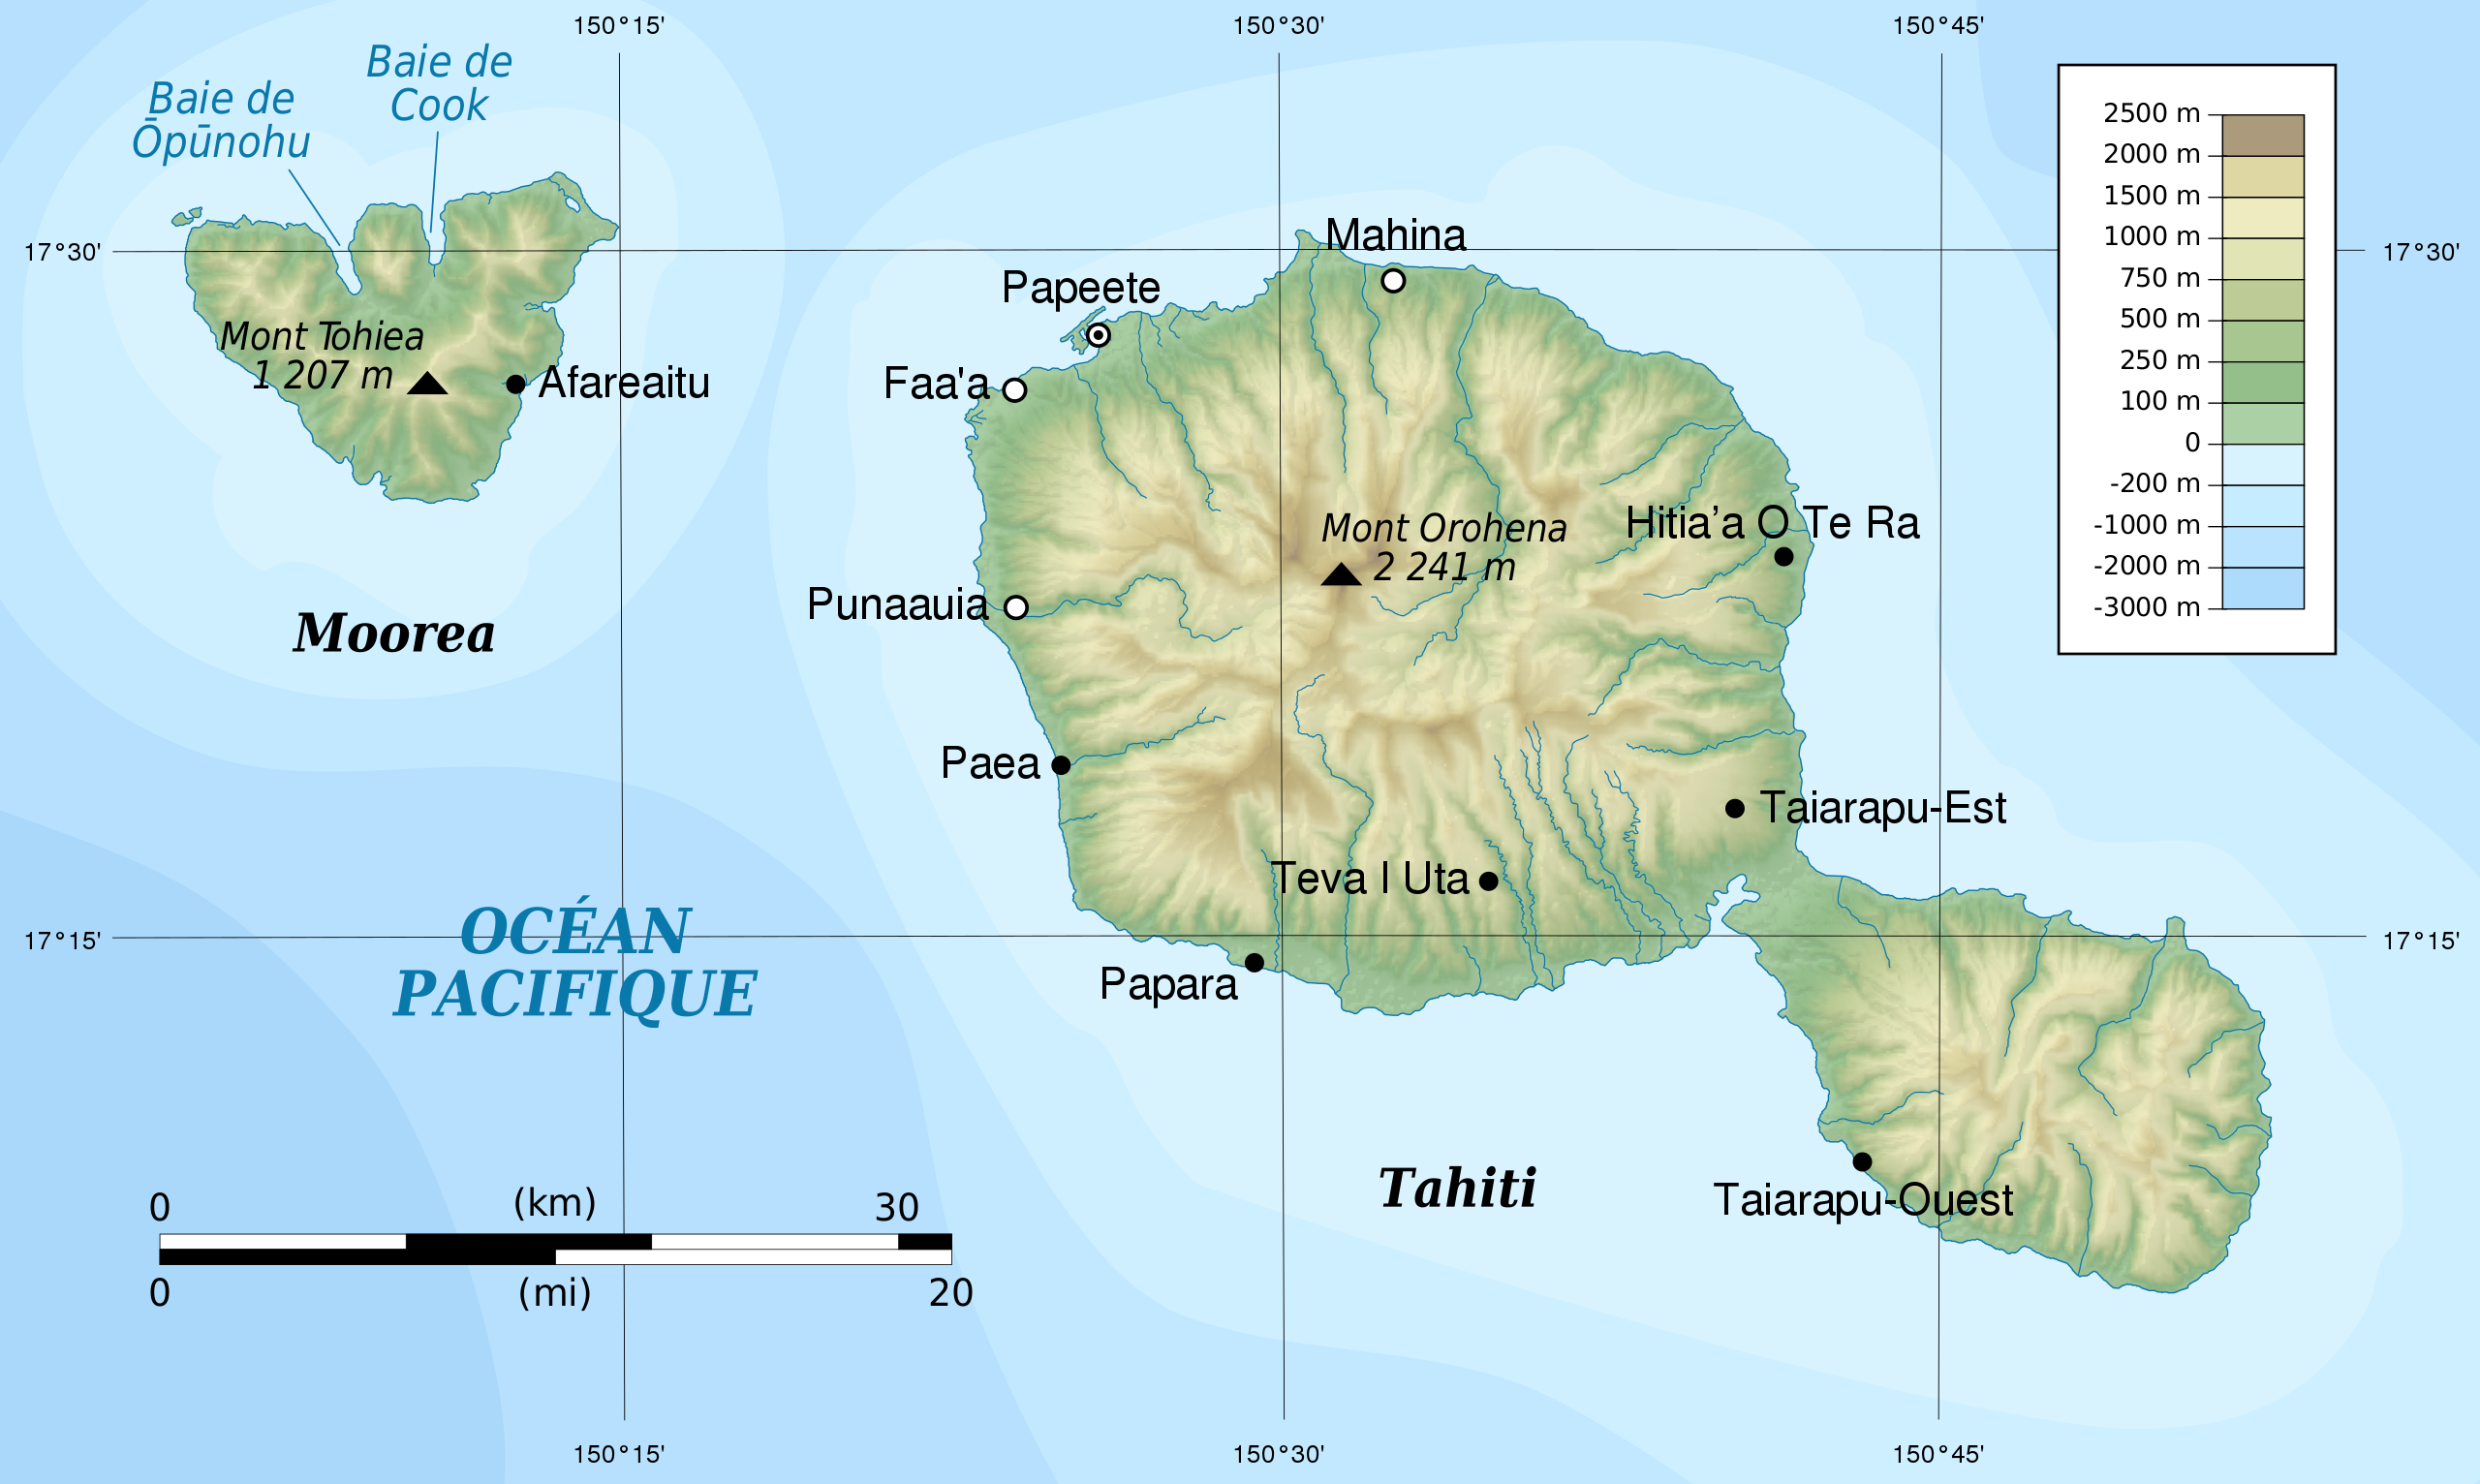 The map of Tahiti islands